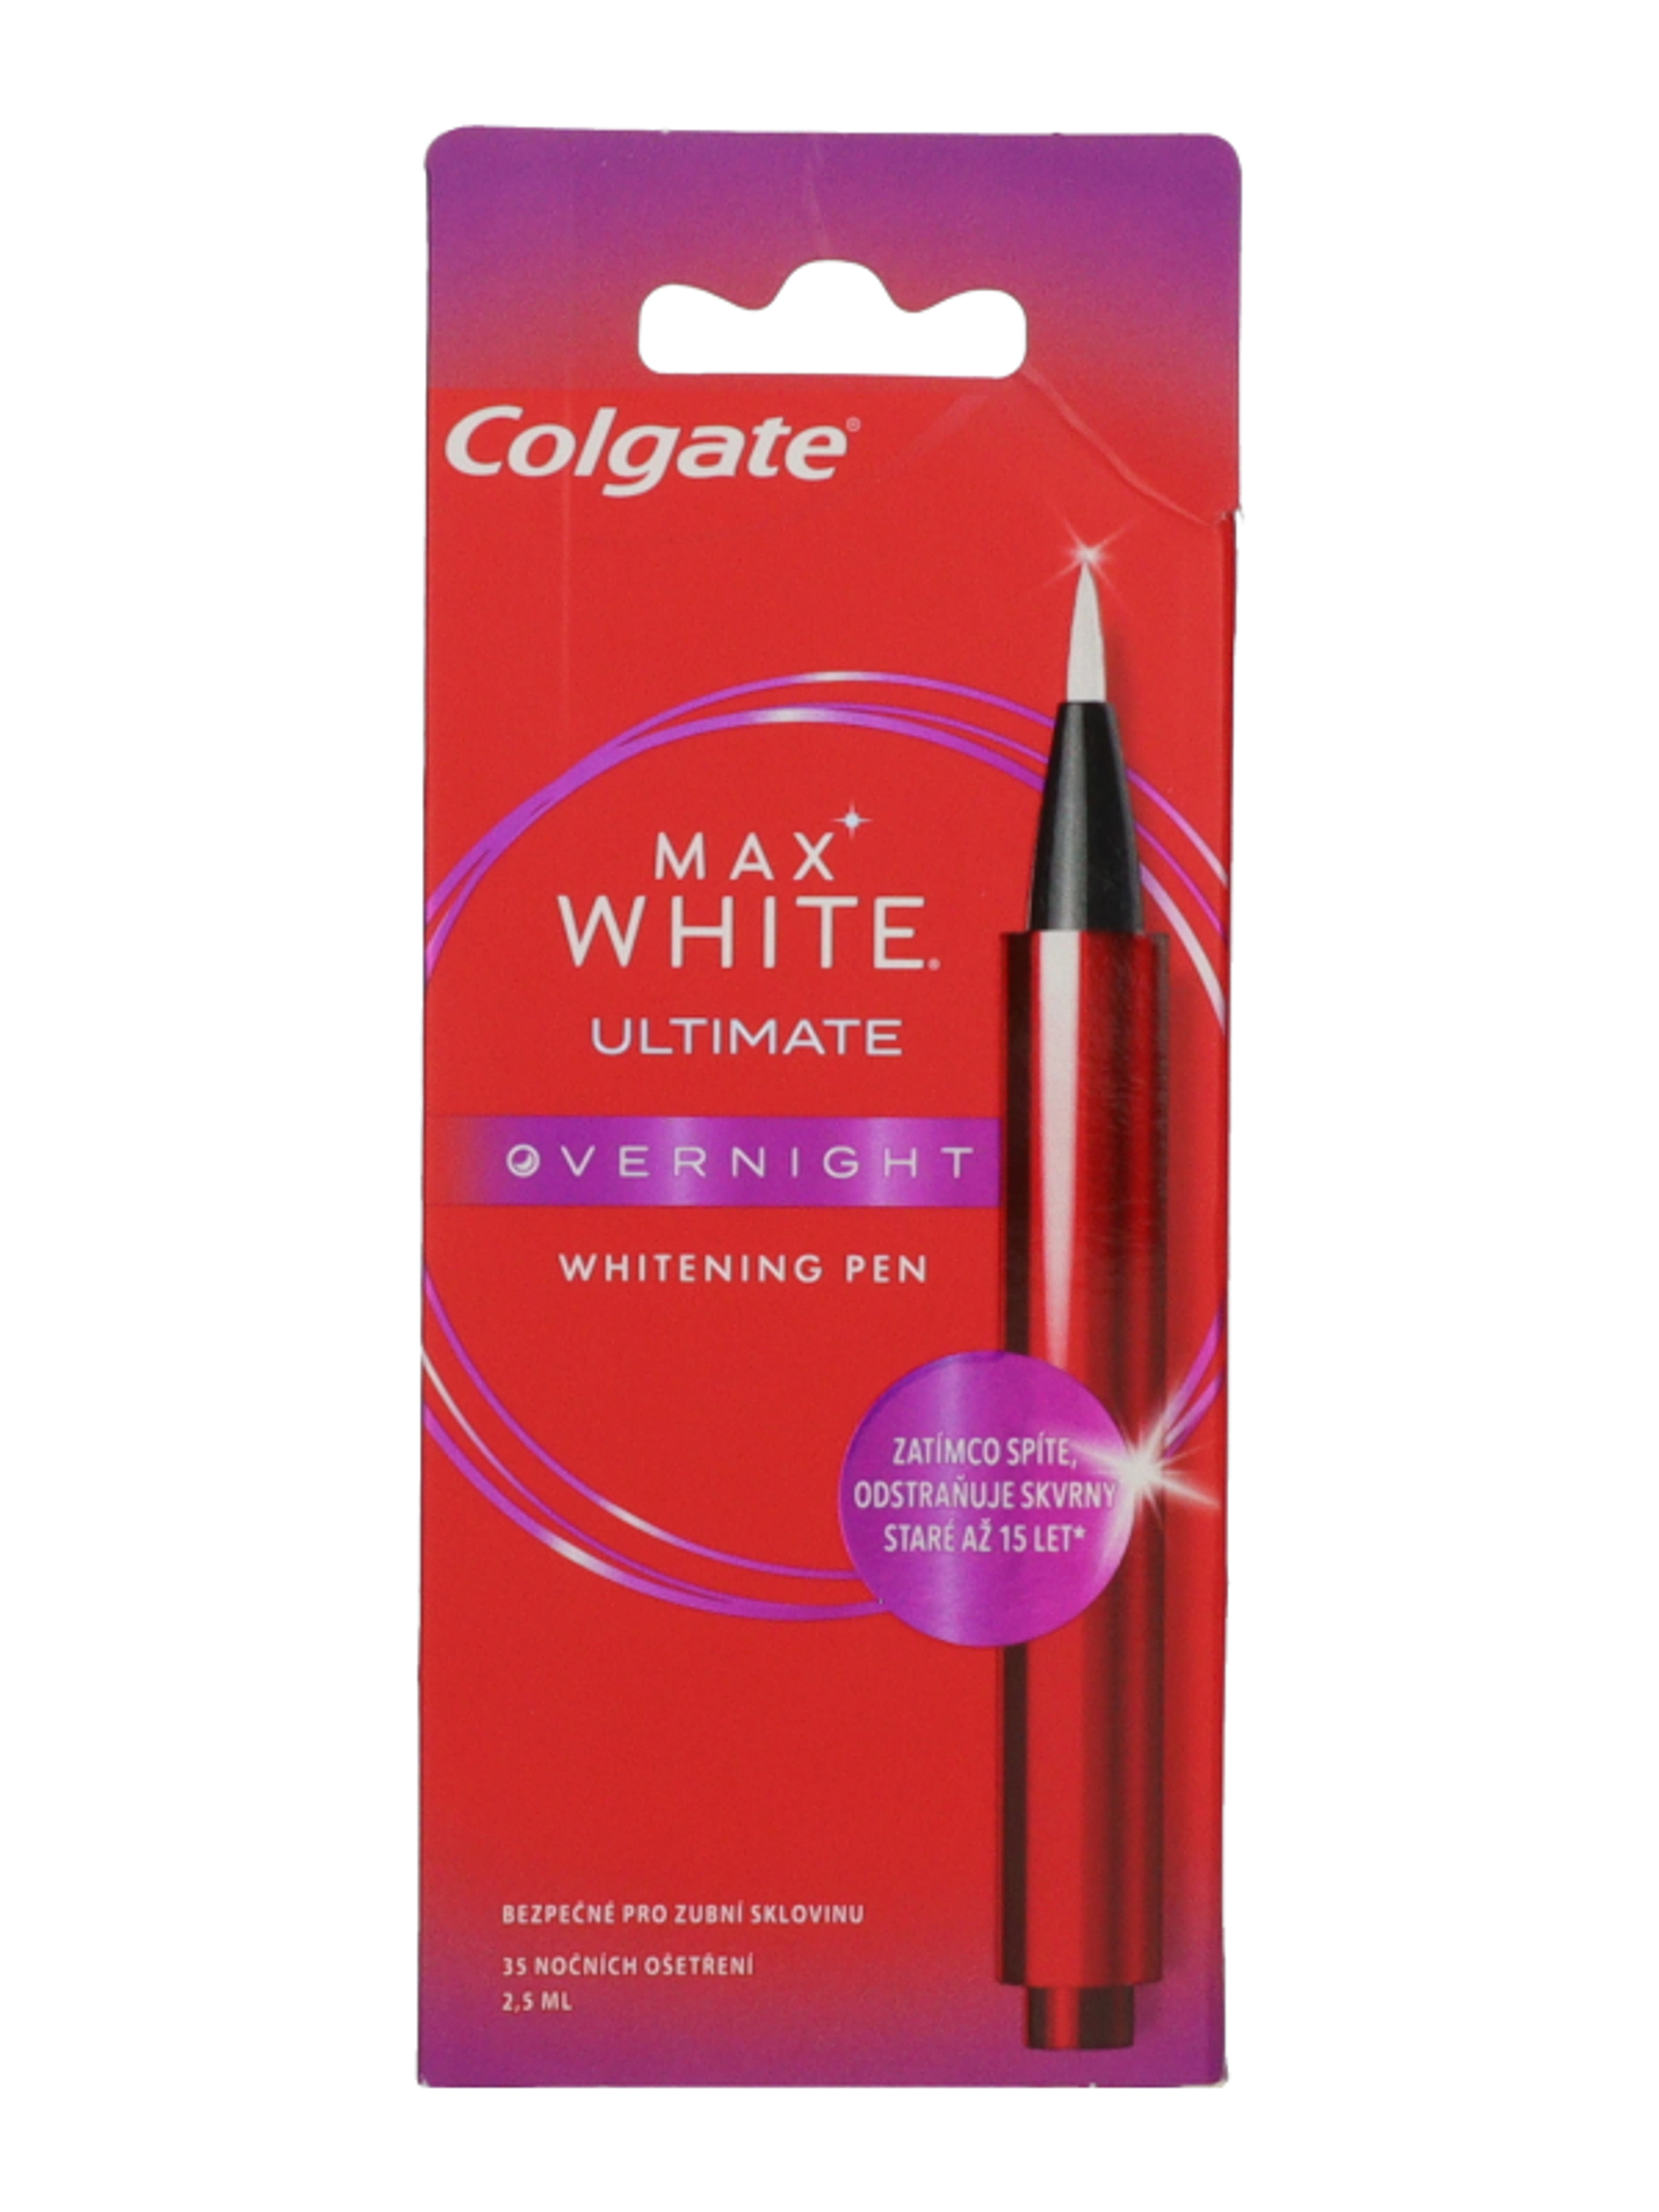 Colgate Max White Ultimate éjszakai fogfehérítő toll - 2,5 ml-11